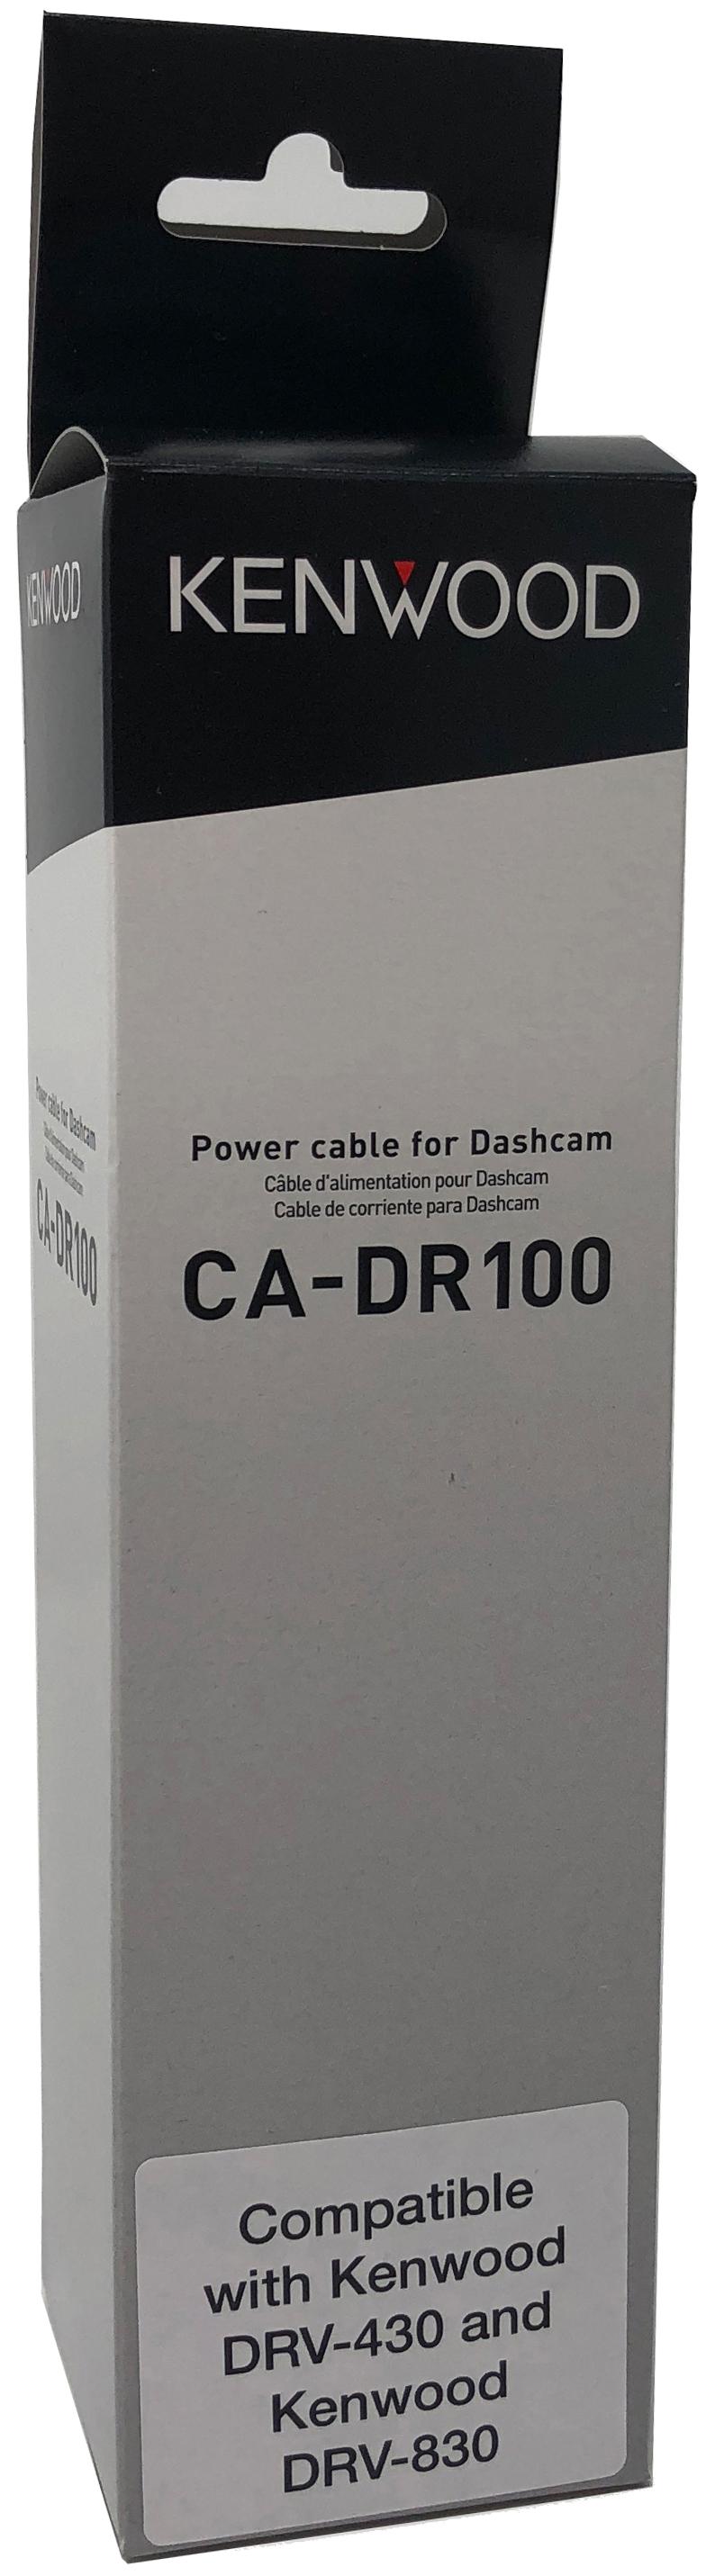 Kenwood Ca-Dr100 Hardwired Fitting Kit For Drv-830 & Drv-430 Dash Cams